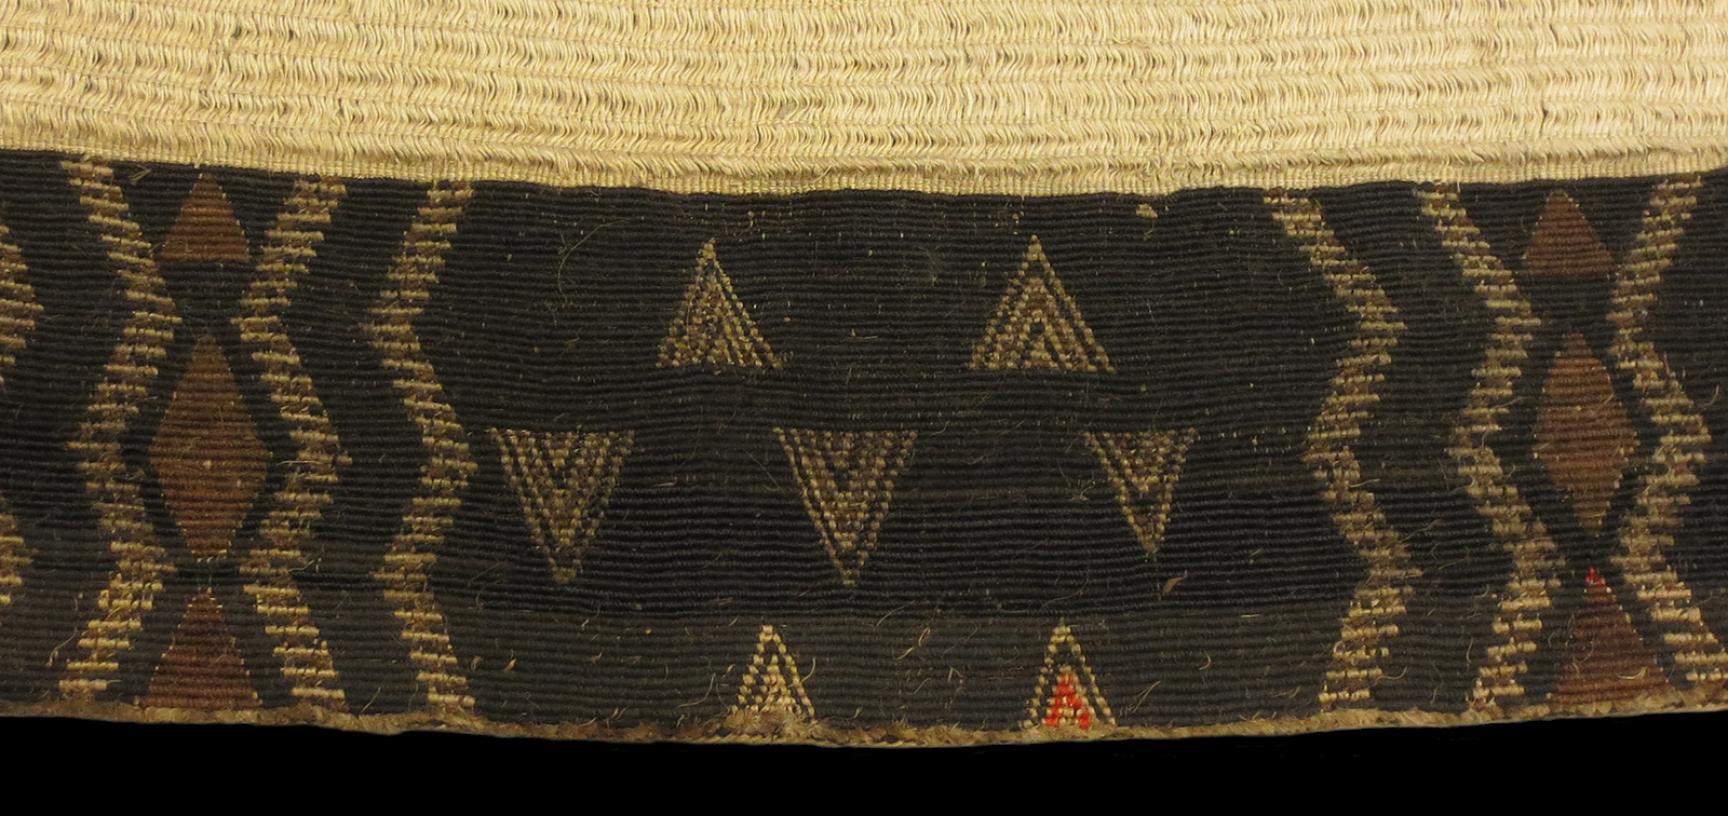 Detail of tāniko border on cloak (1923.87.162)